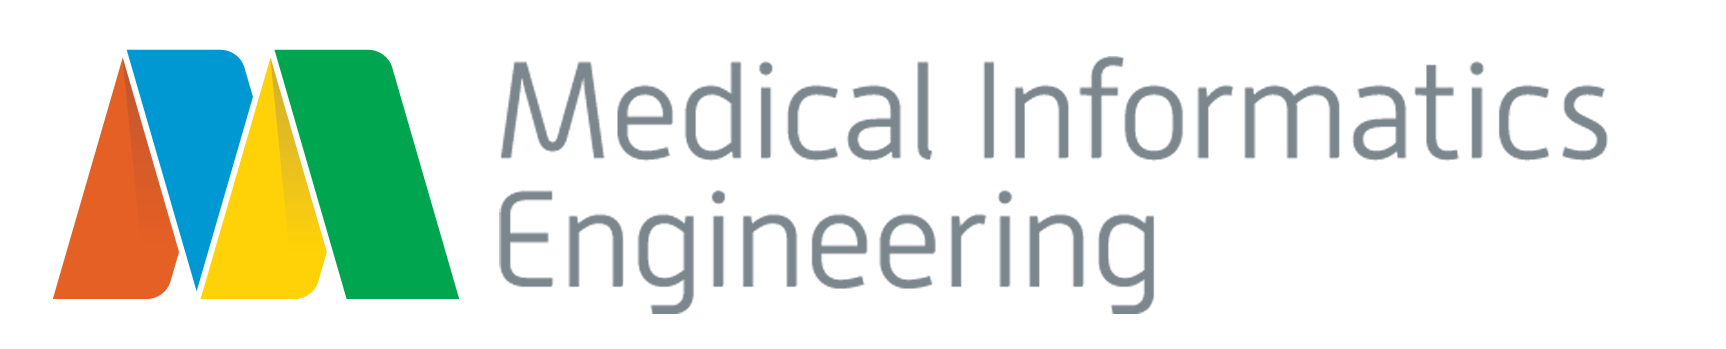 Medical Informatics Engineering